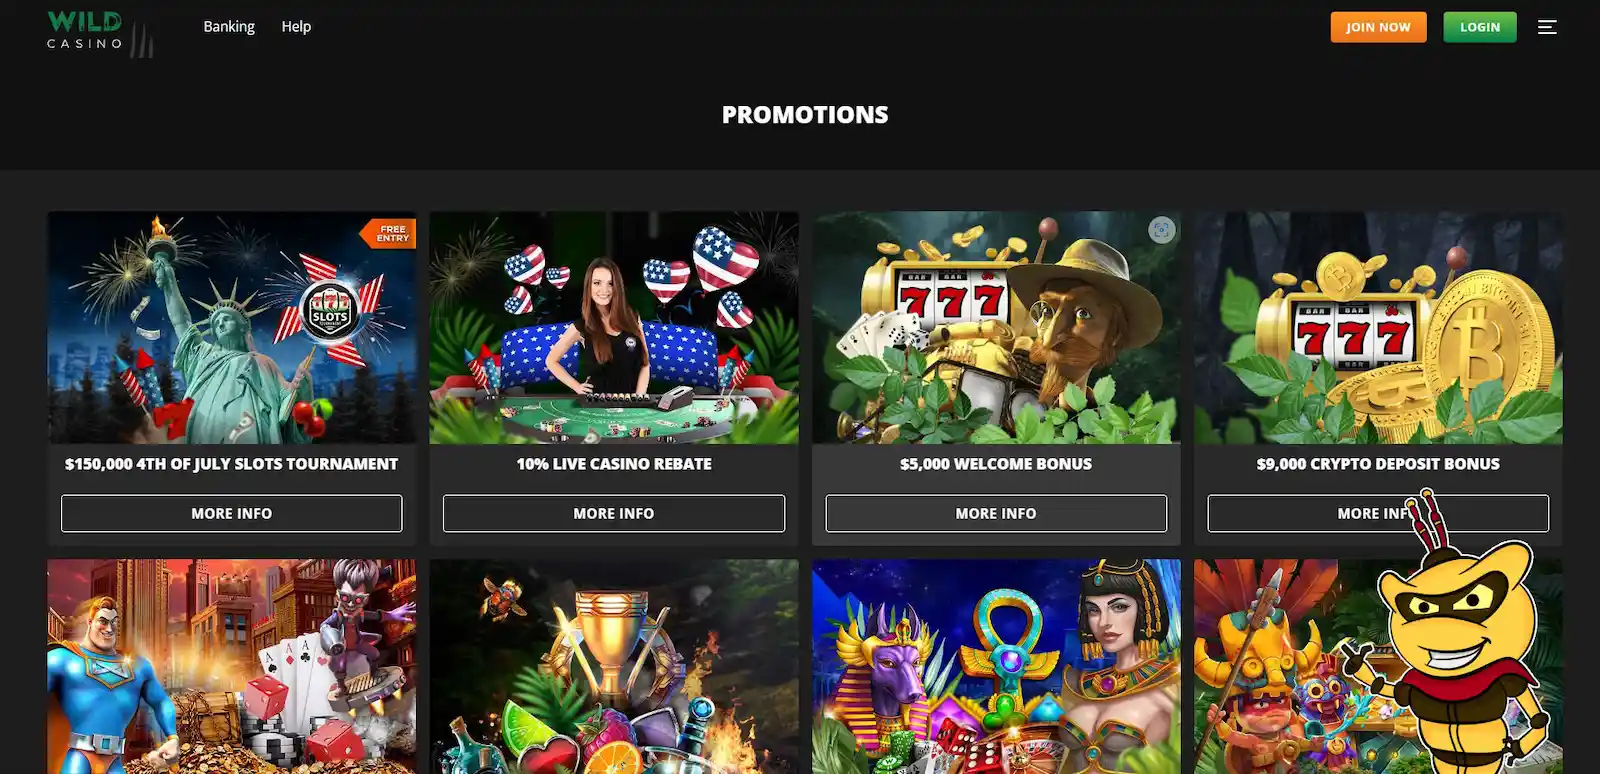 Wild Casino Bonus Overview